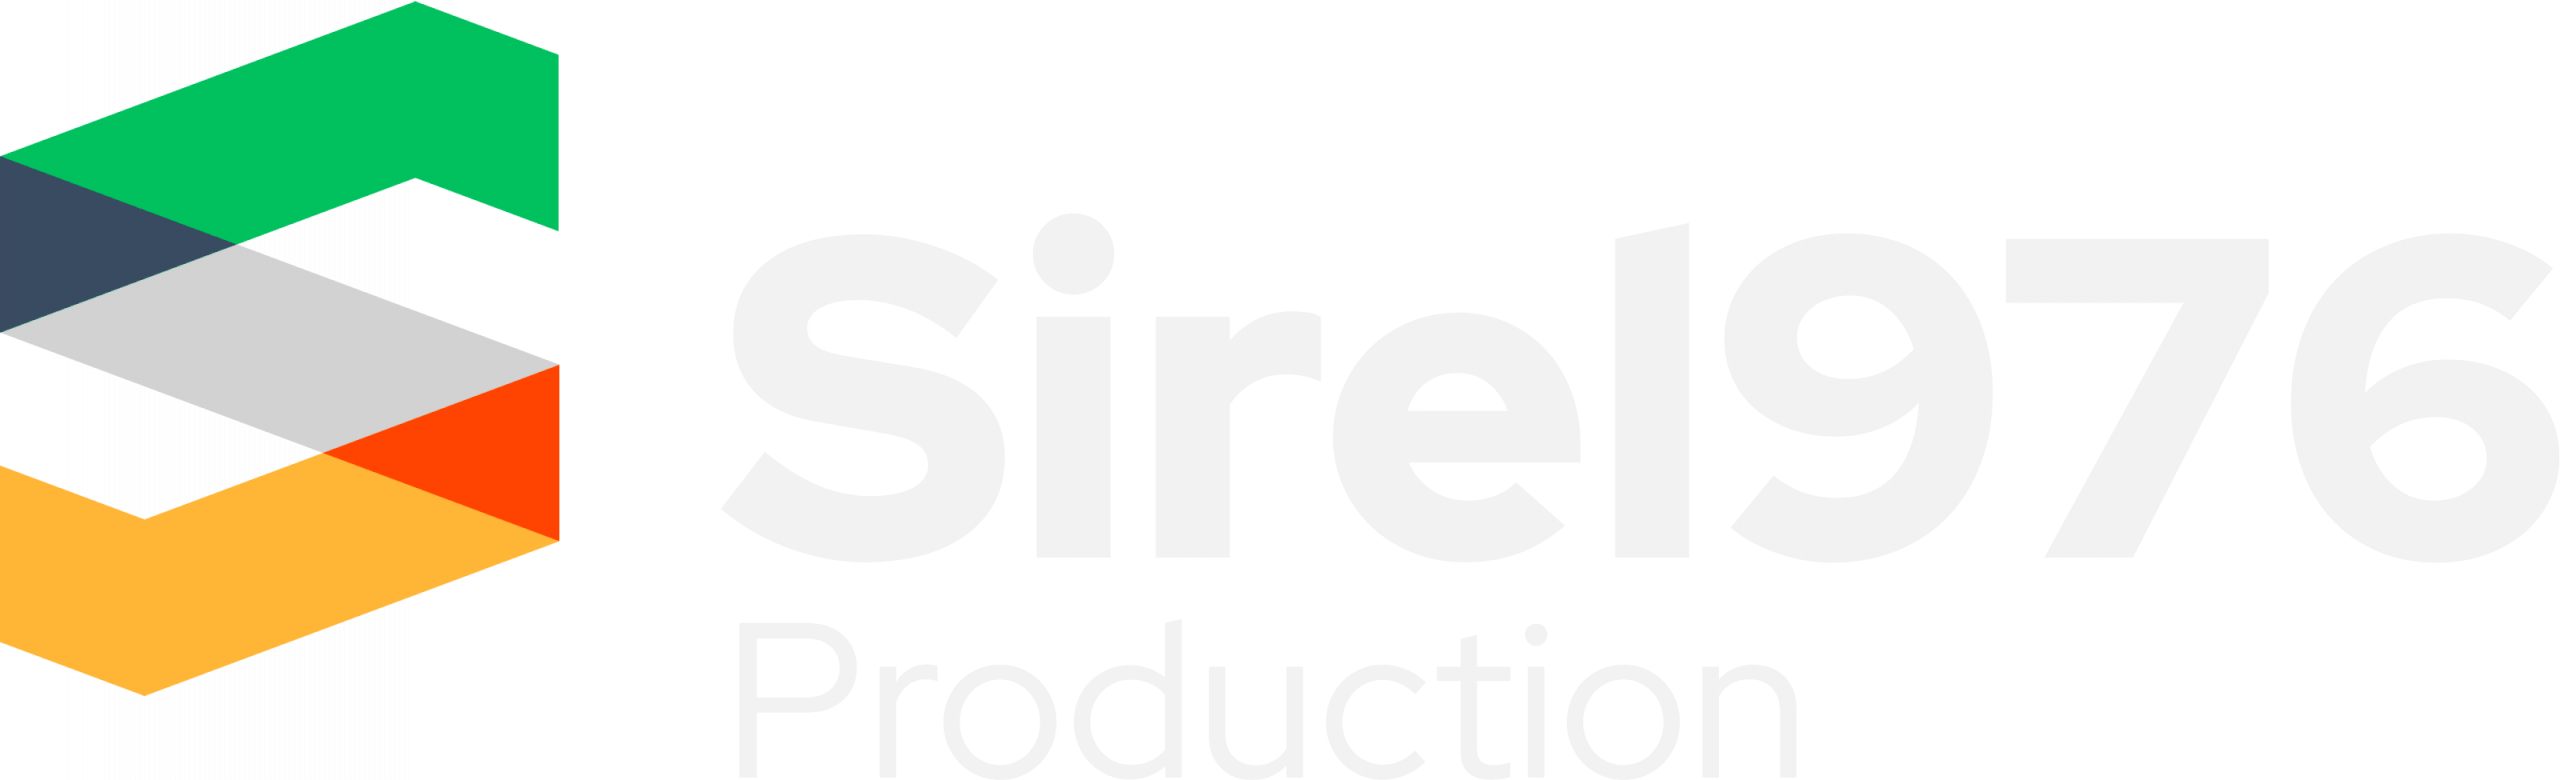 Logo Sirel976 Production v2 - dark 2